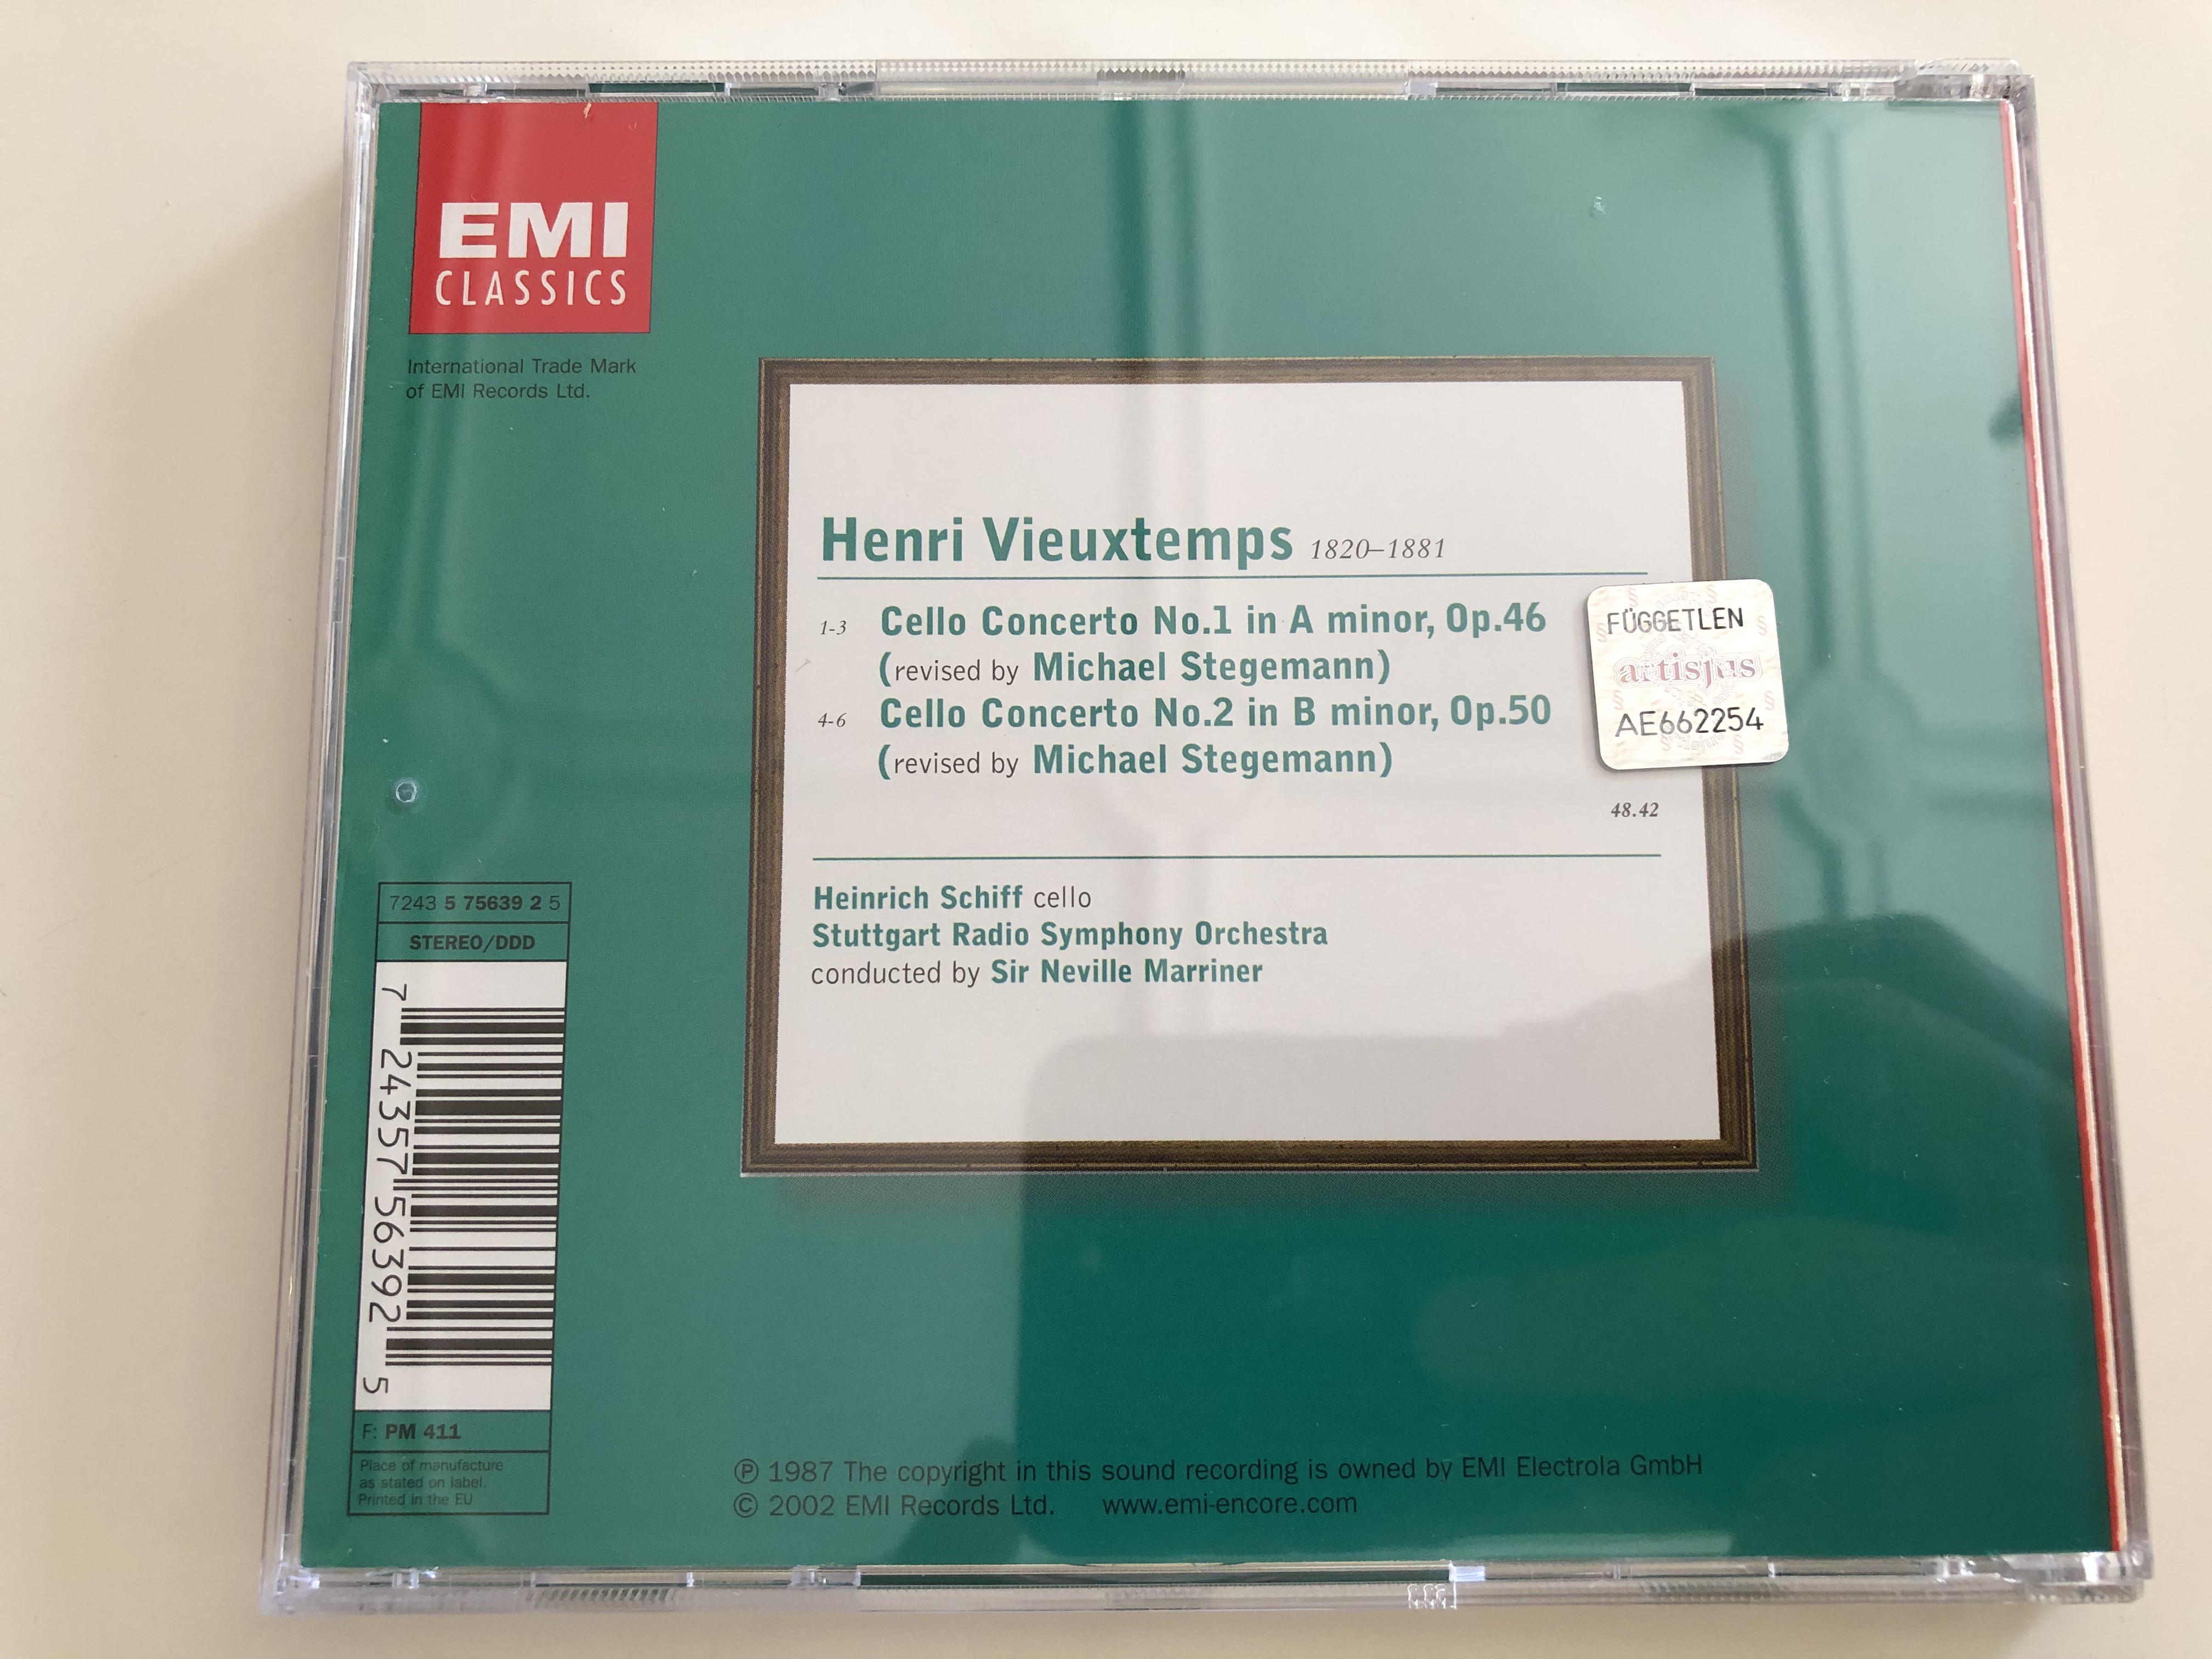 vieuxtemps-cello-concertos-nos.-1-2-heinrich-schiff-cello-stuttgart-radio-symphony-orchestra-conducted-by-sir-neville-marriner-emi-classics-audio-cd-2002-7-.jpg